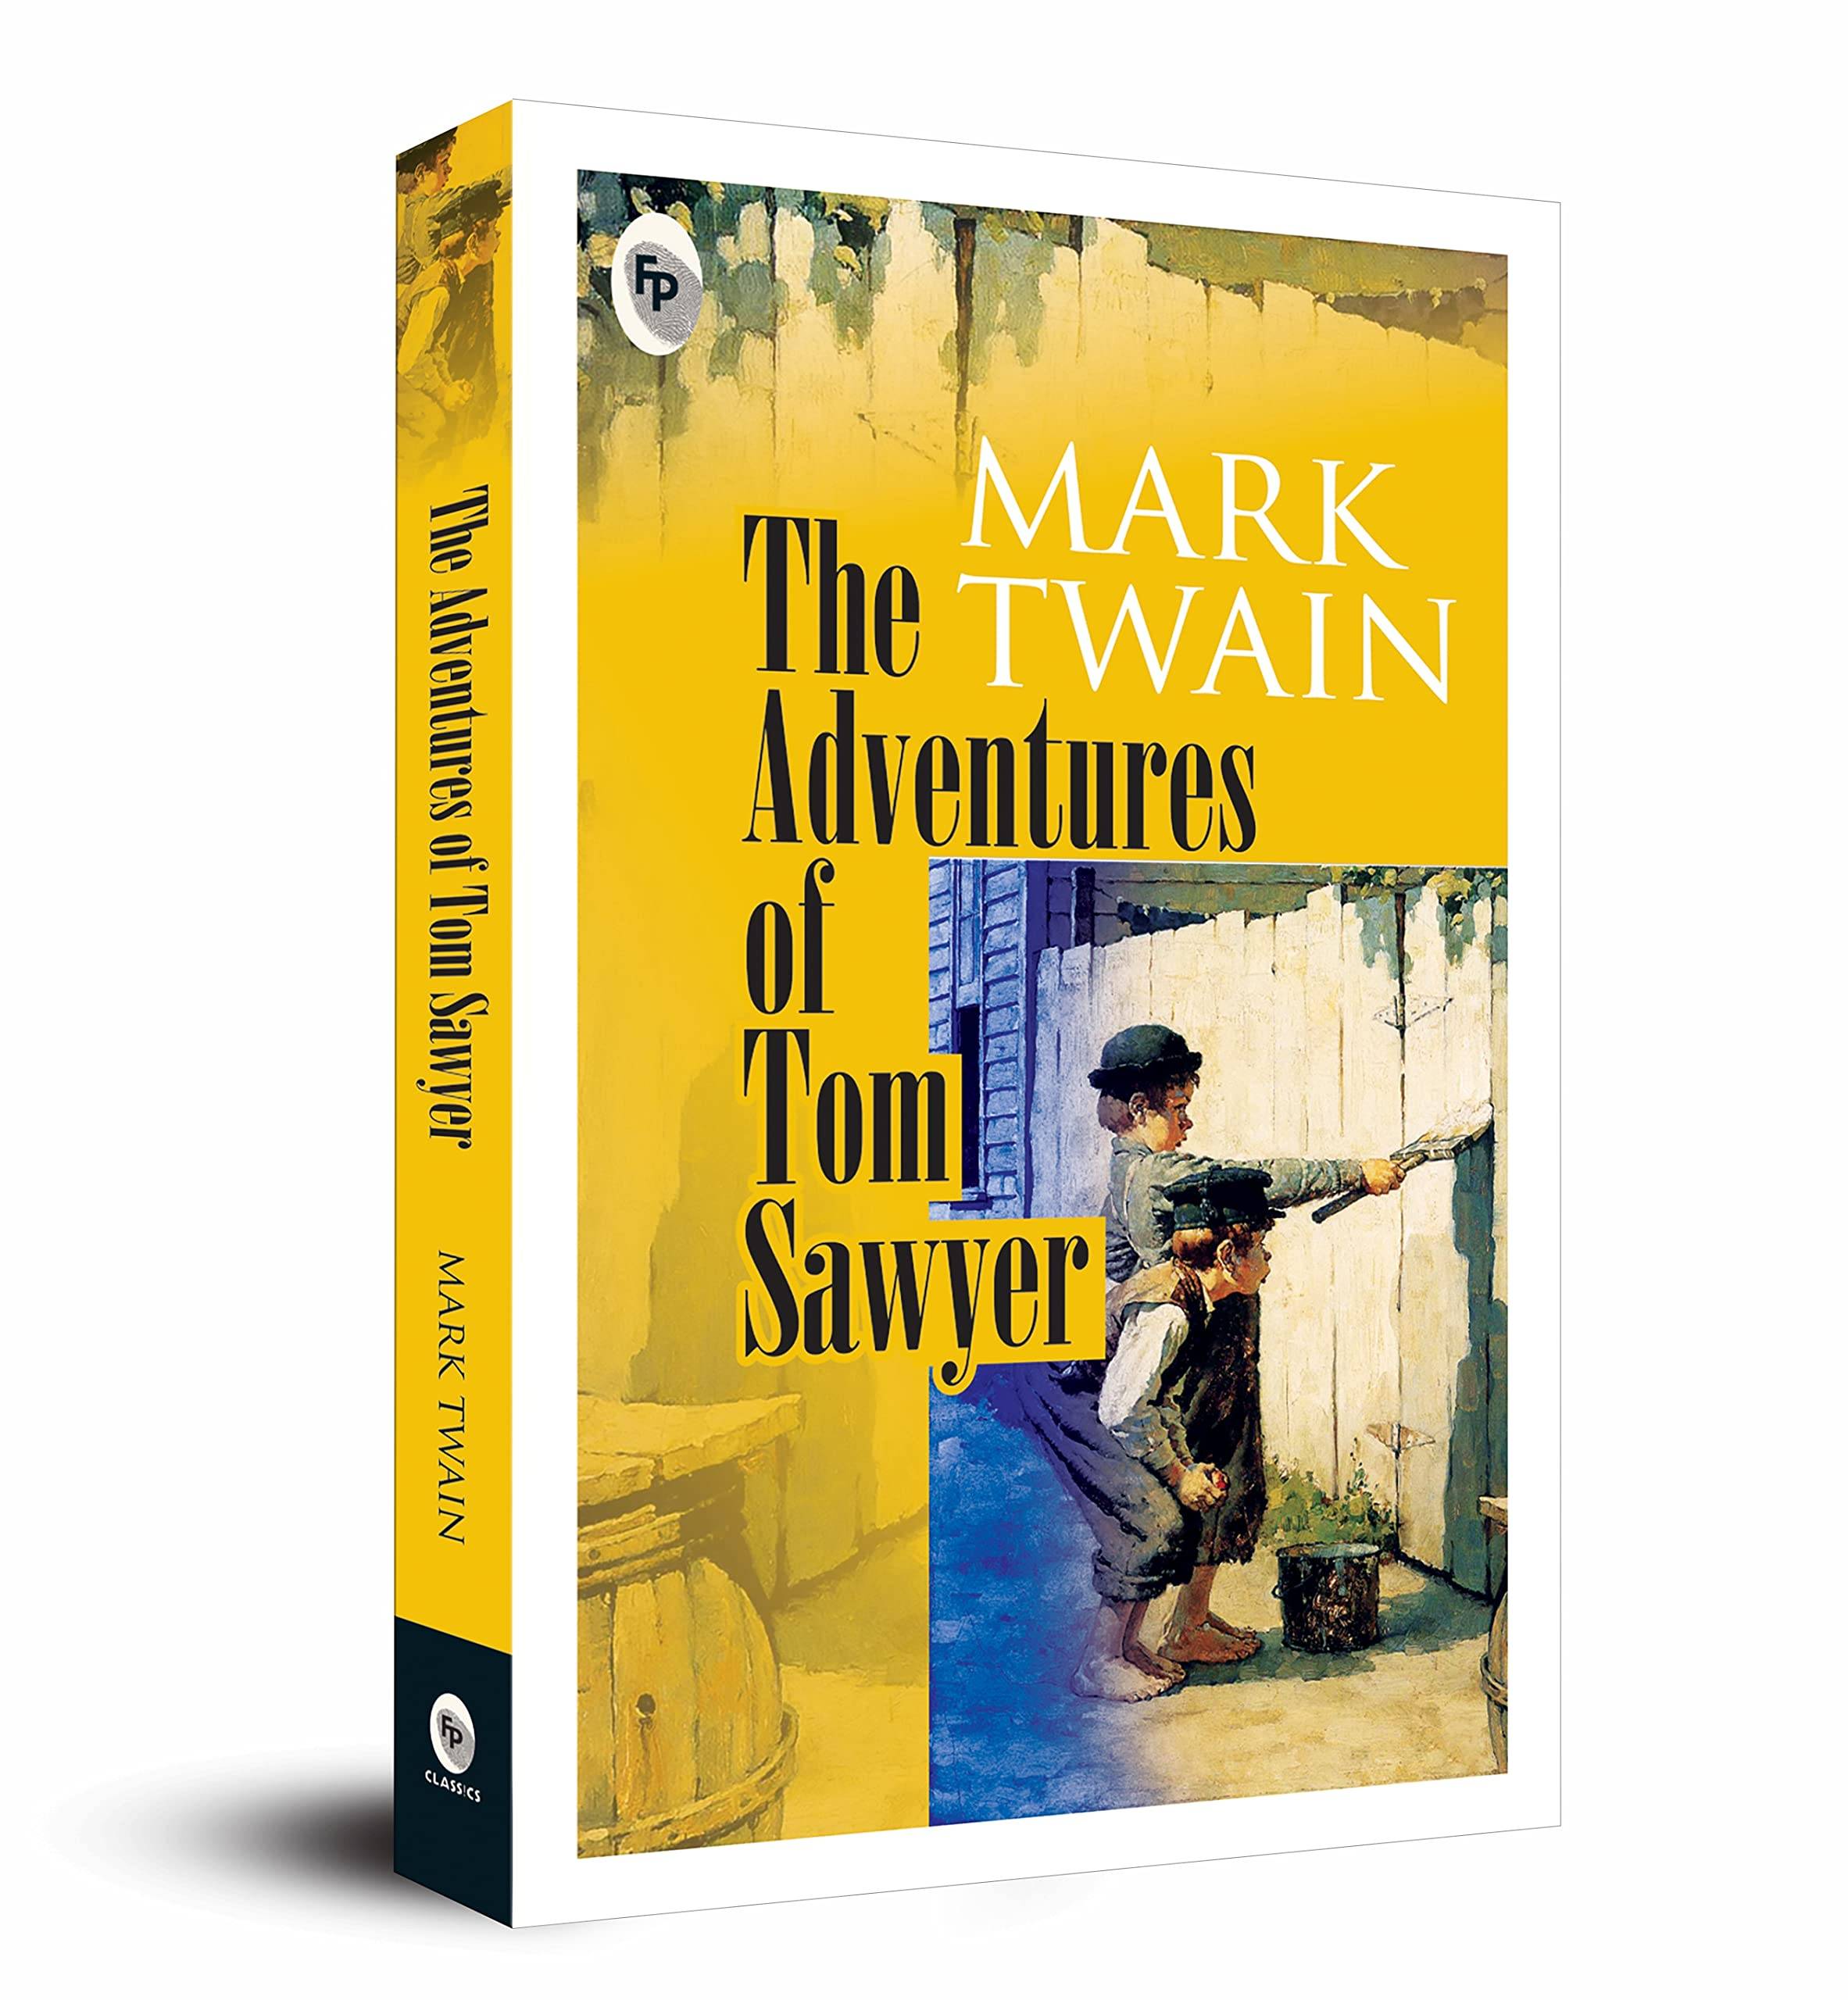 IMG : The adventures of Tom Sawyer